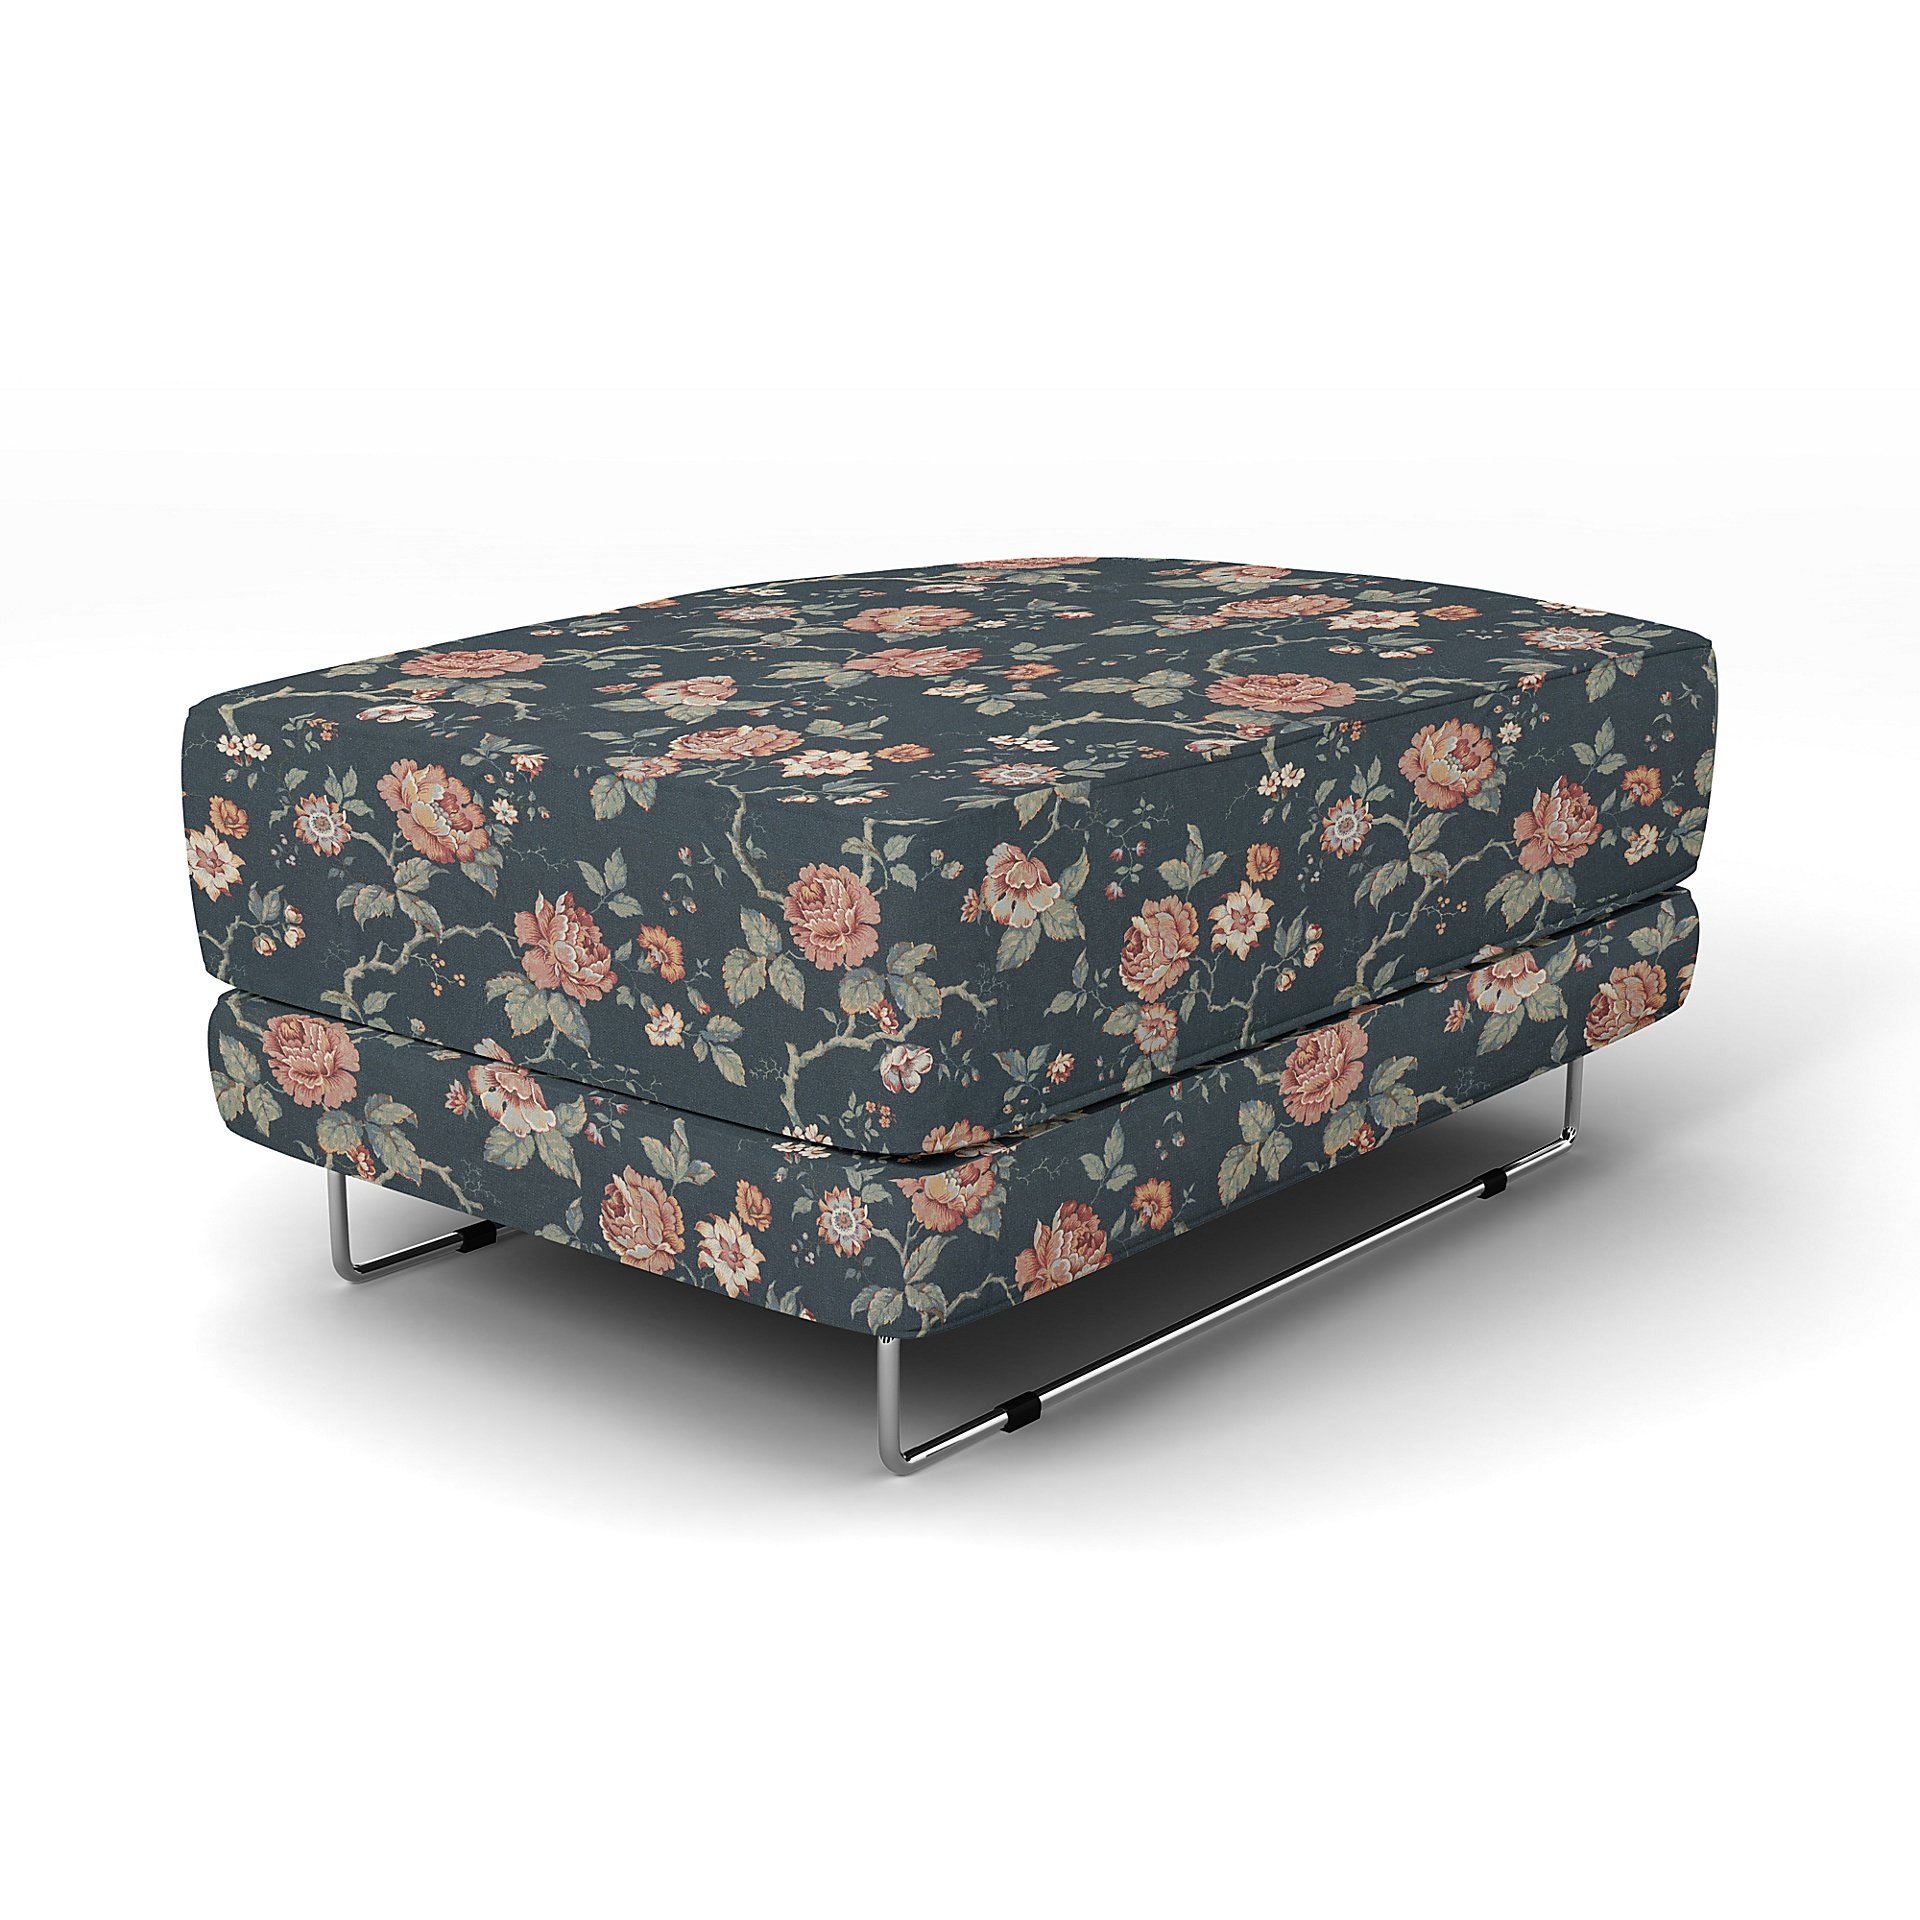 IKEA - Tylosand Footstool Cover, Rosentrad Dark, BEMZ x BORASTAPETER COLLECTION - Bemz